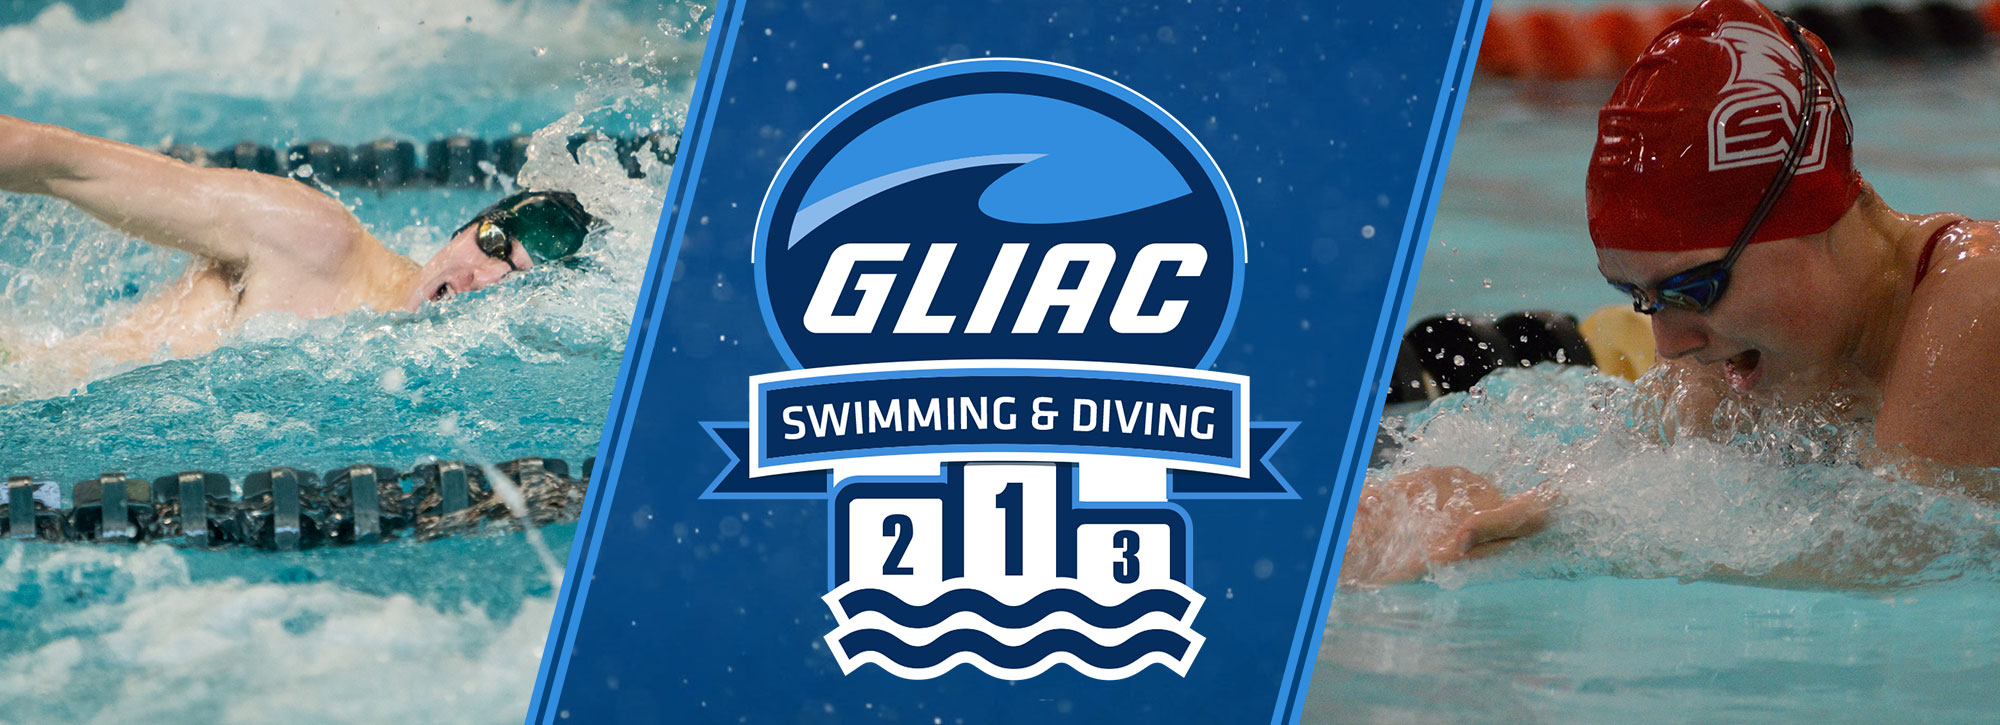 Saginaw Valley's Mattar, Wayne State's Katulski Garner GLIAC Swimming Athlete of the Week Awards